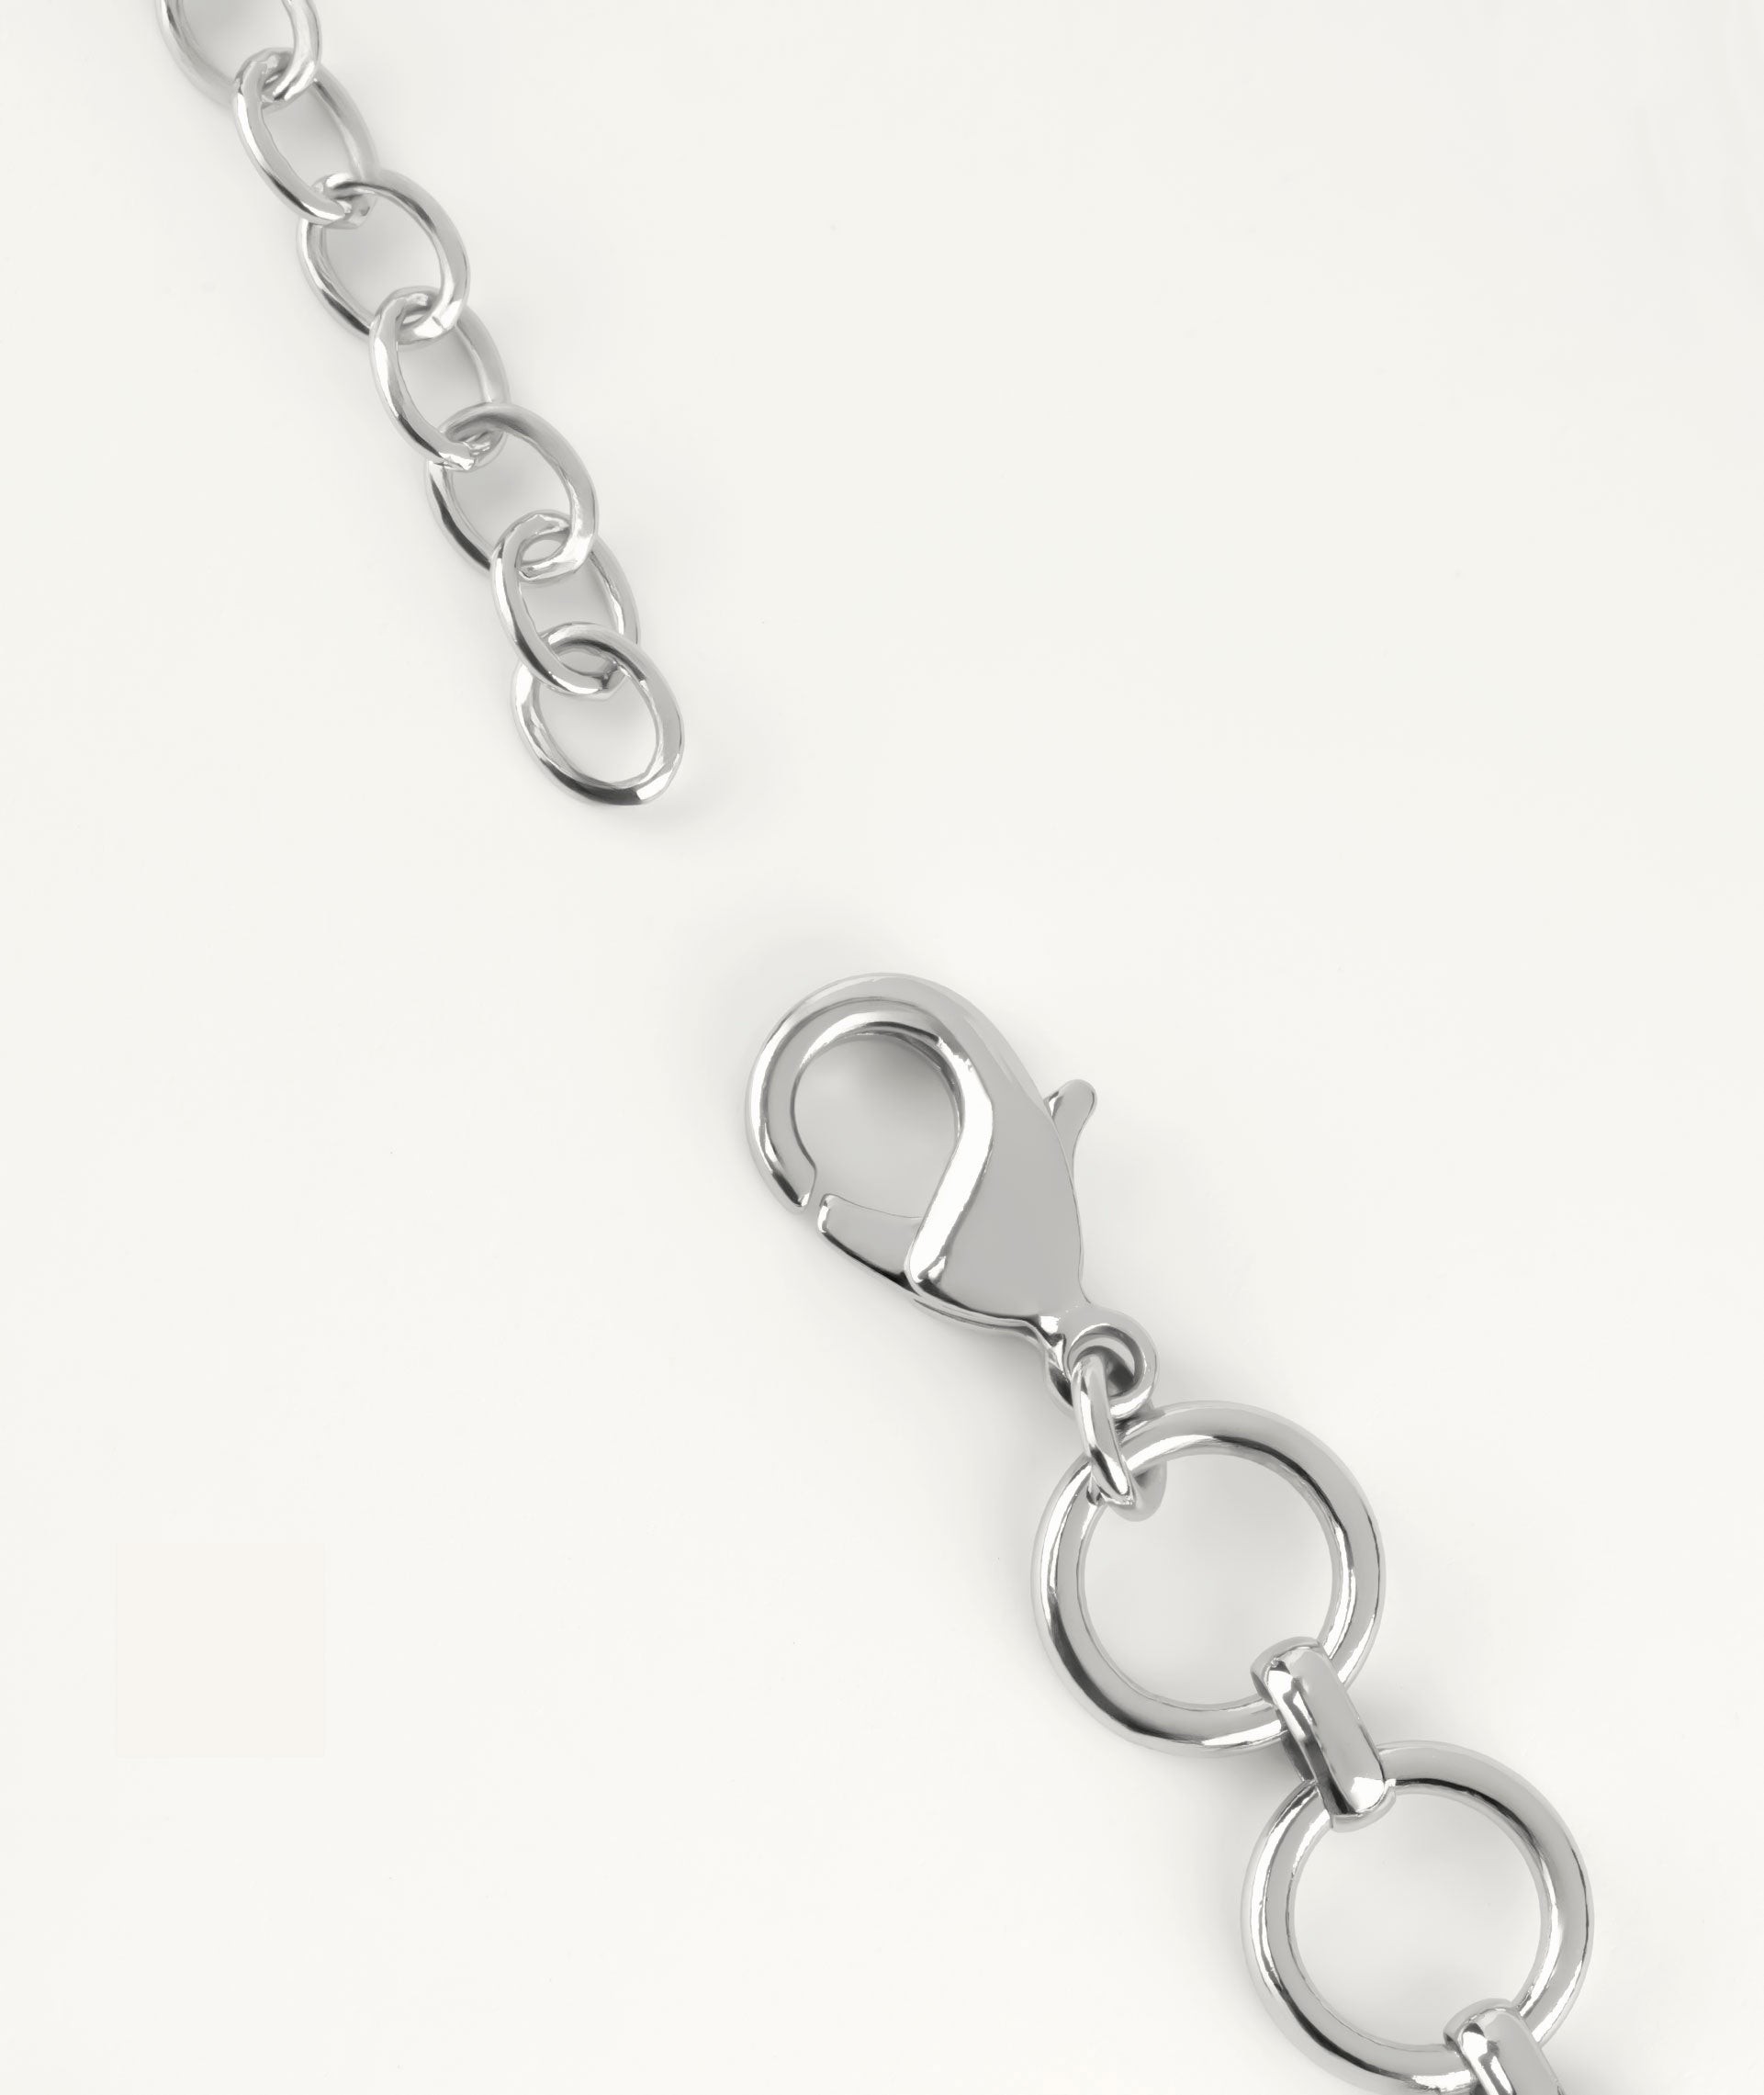 Bracelet Lea Silver plated link circle